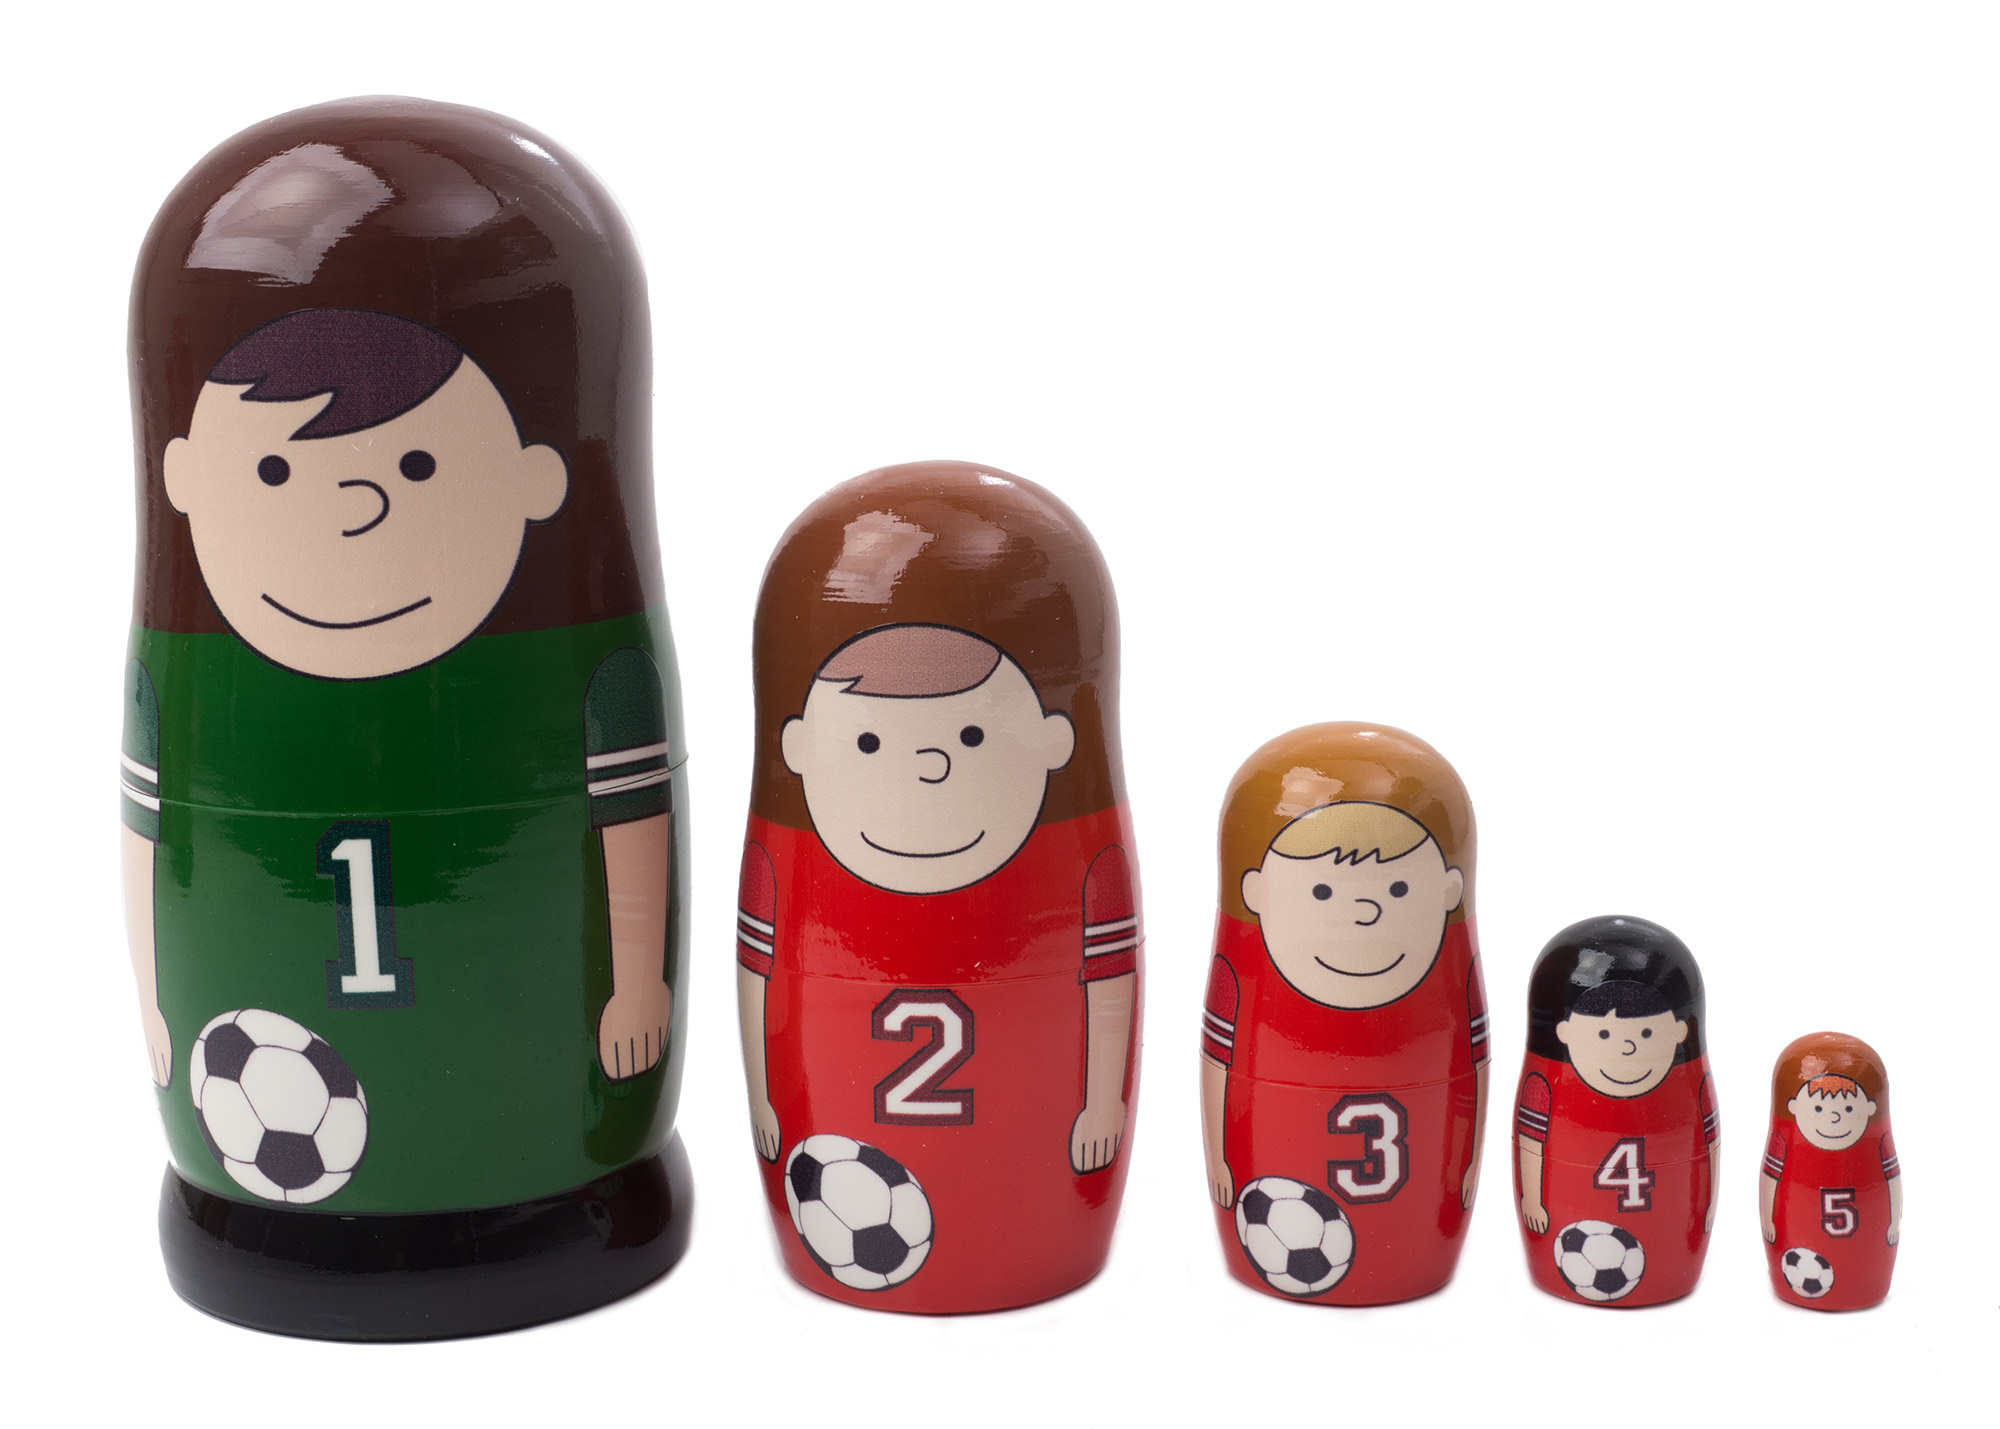 Buy Soccer Counting Nesting Doll 5pc./5" at GoldenCockerel.com